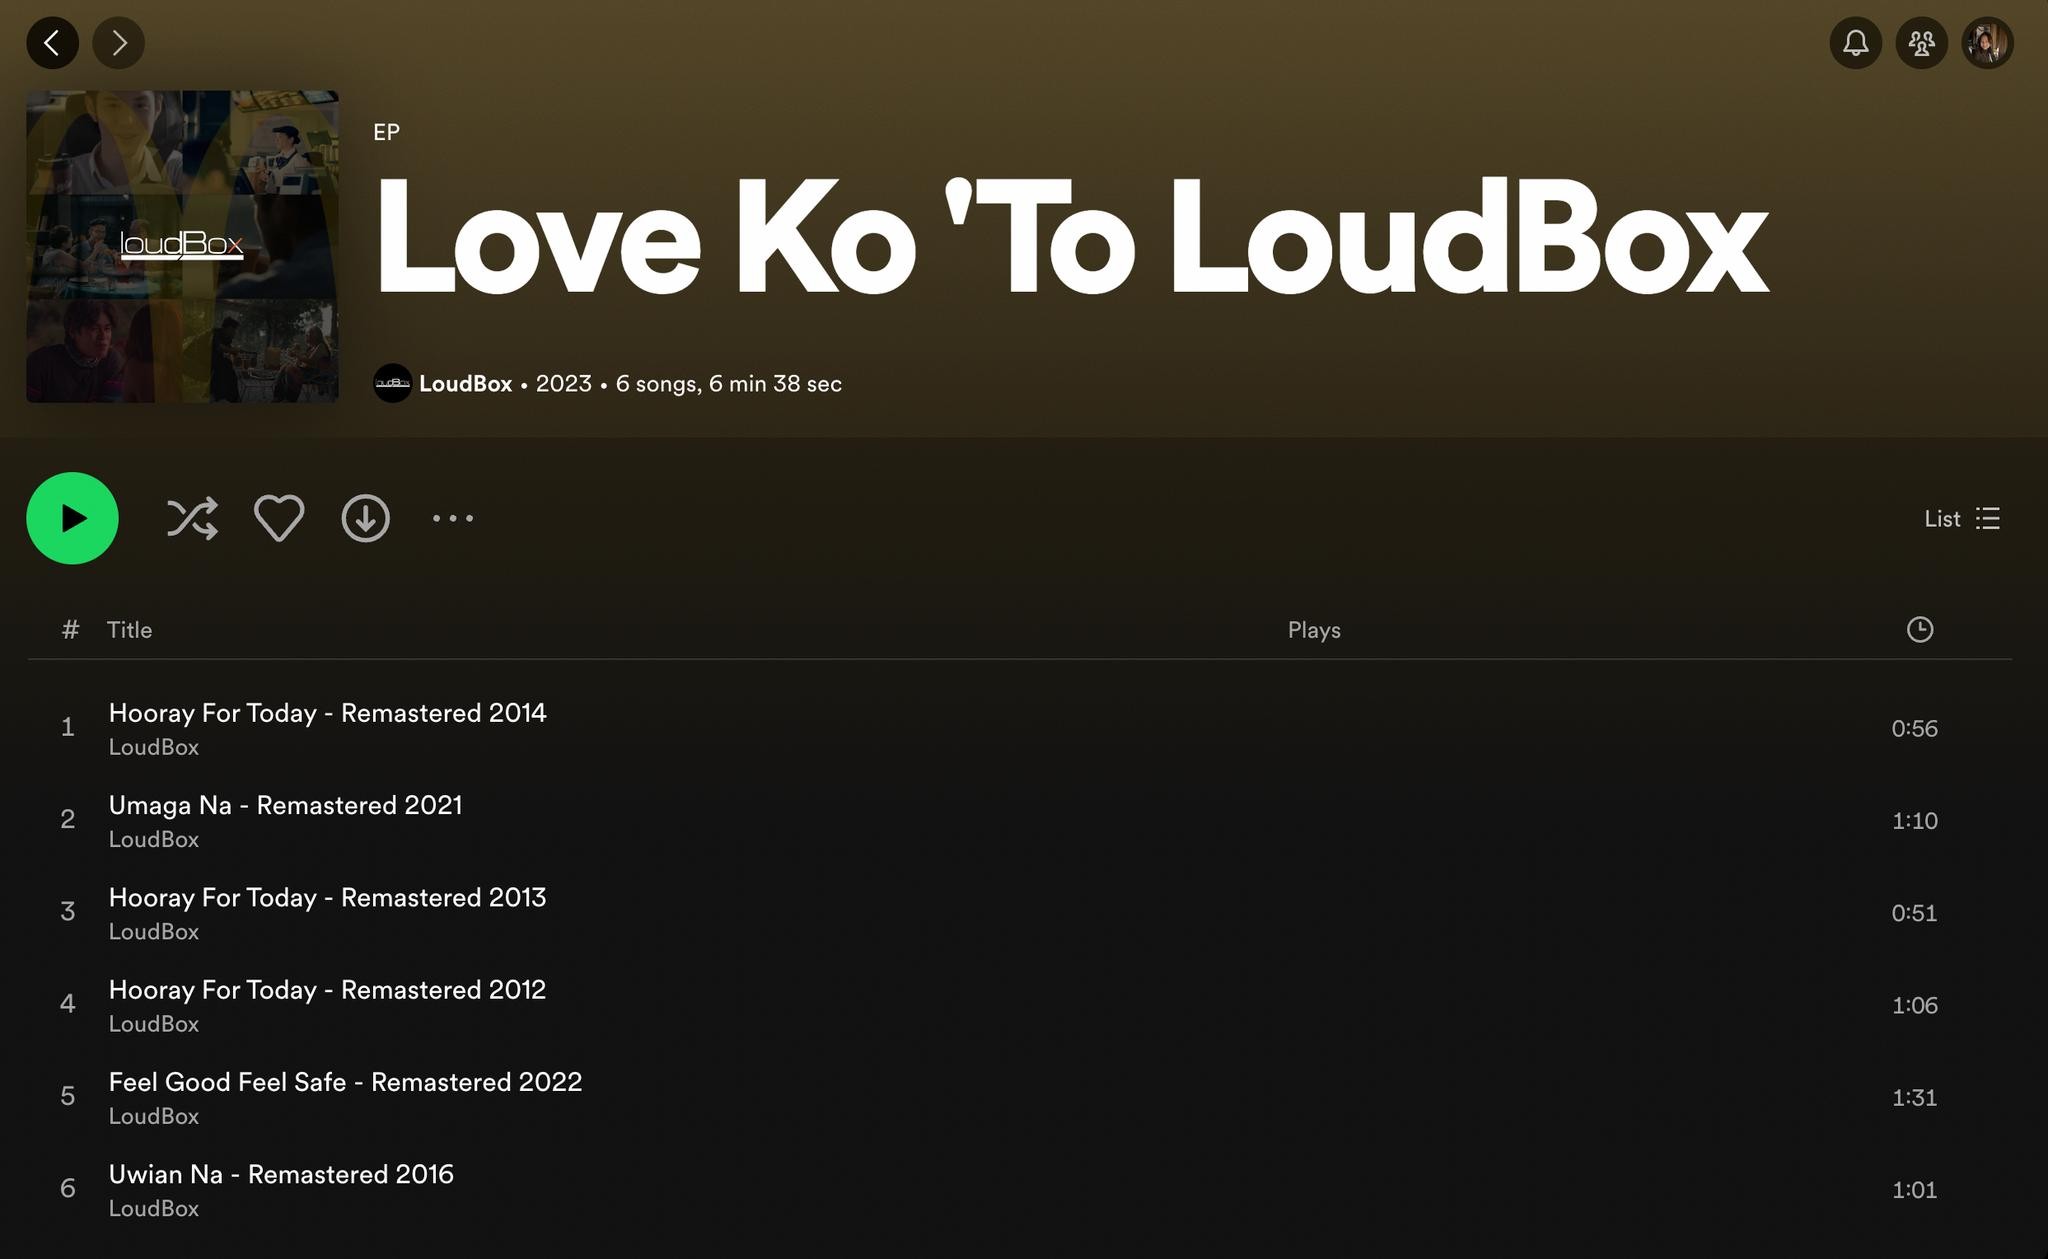 Love Ko 'To LoudBox